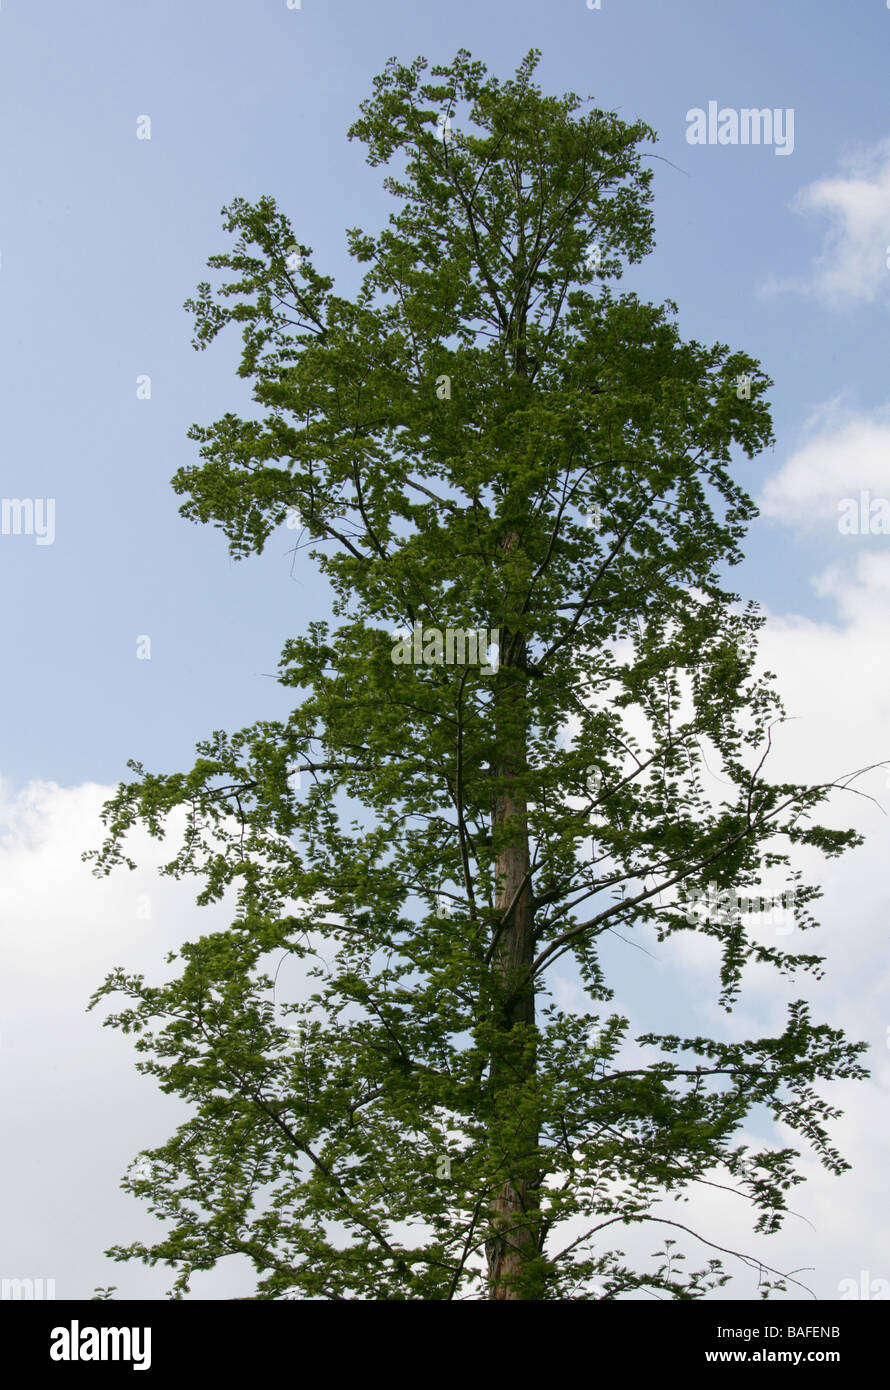 Dawn Redwood, Metasequoia glyptostroboides. Sichuan Hubei Region, China Stockfoto